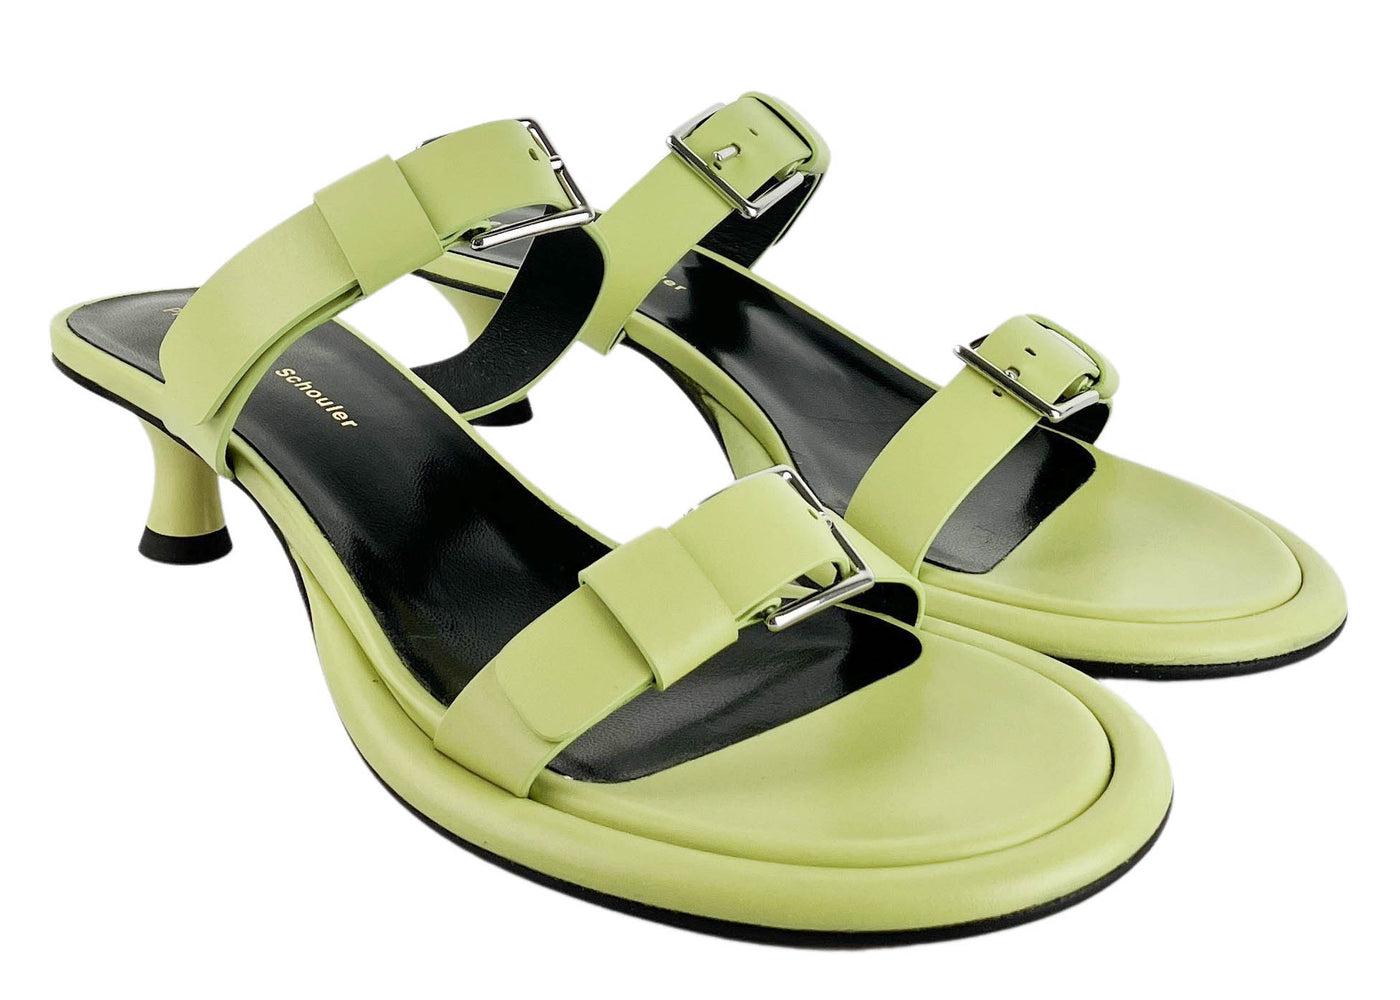 Proenza Schouler Pipe Buckle Sandals in Pale Green - Discounts on Proenza Schouler at UAL